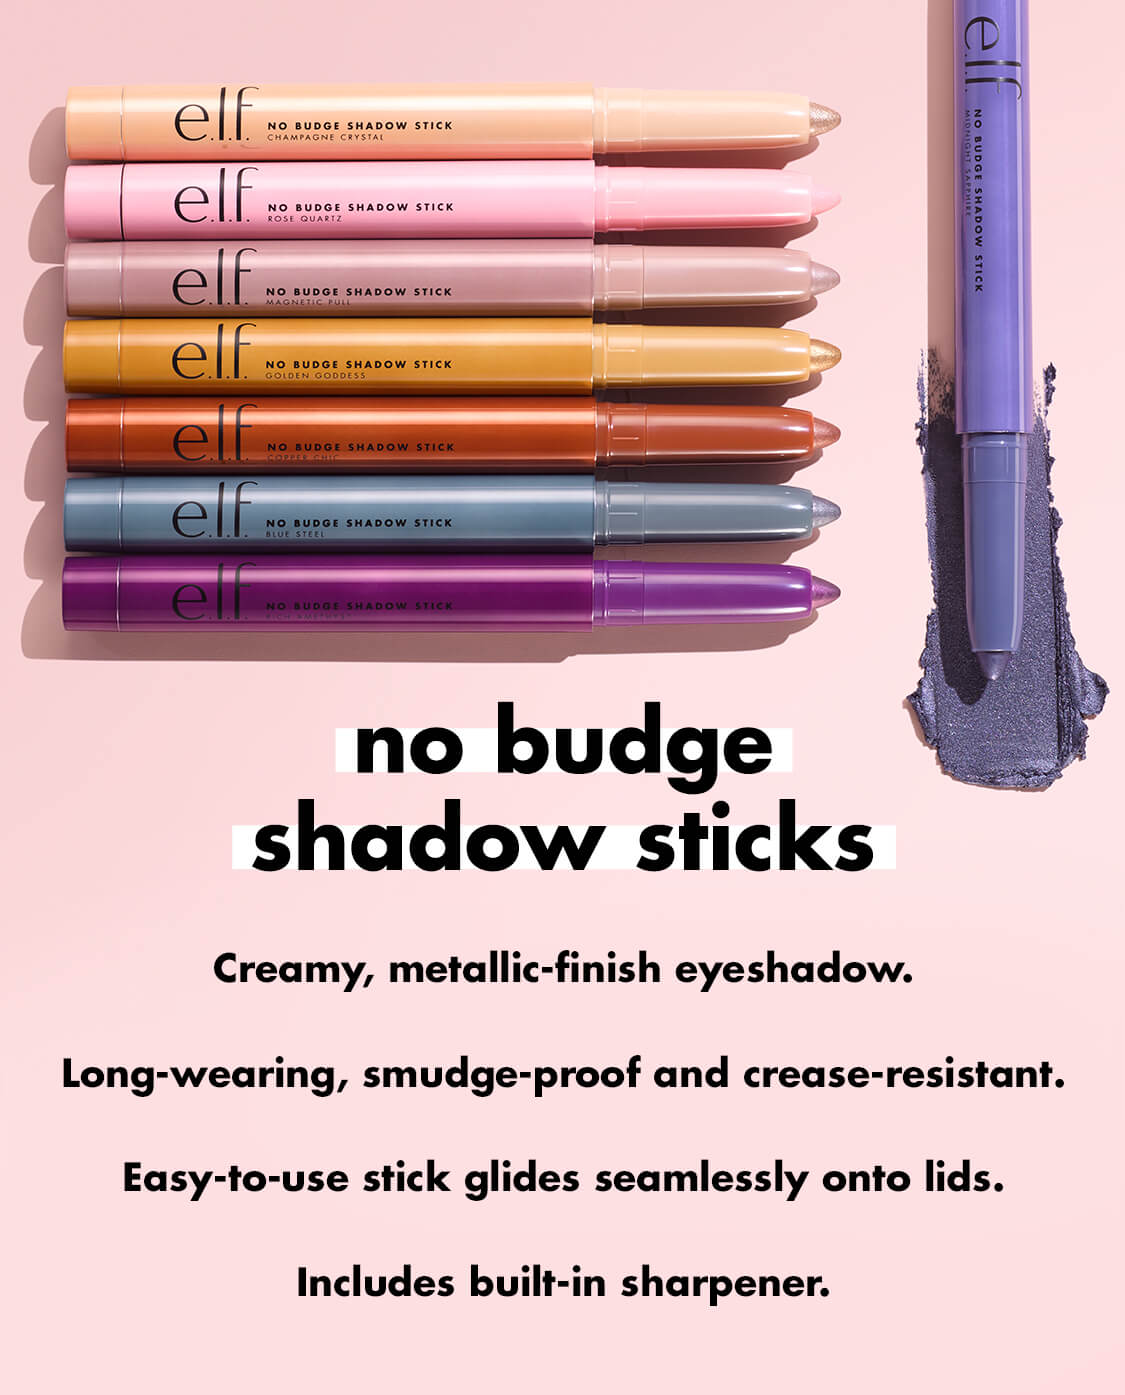 No Budge Cream Eyeshadow Sticks